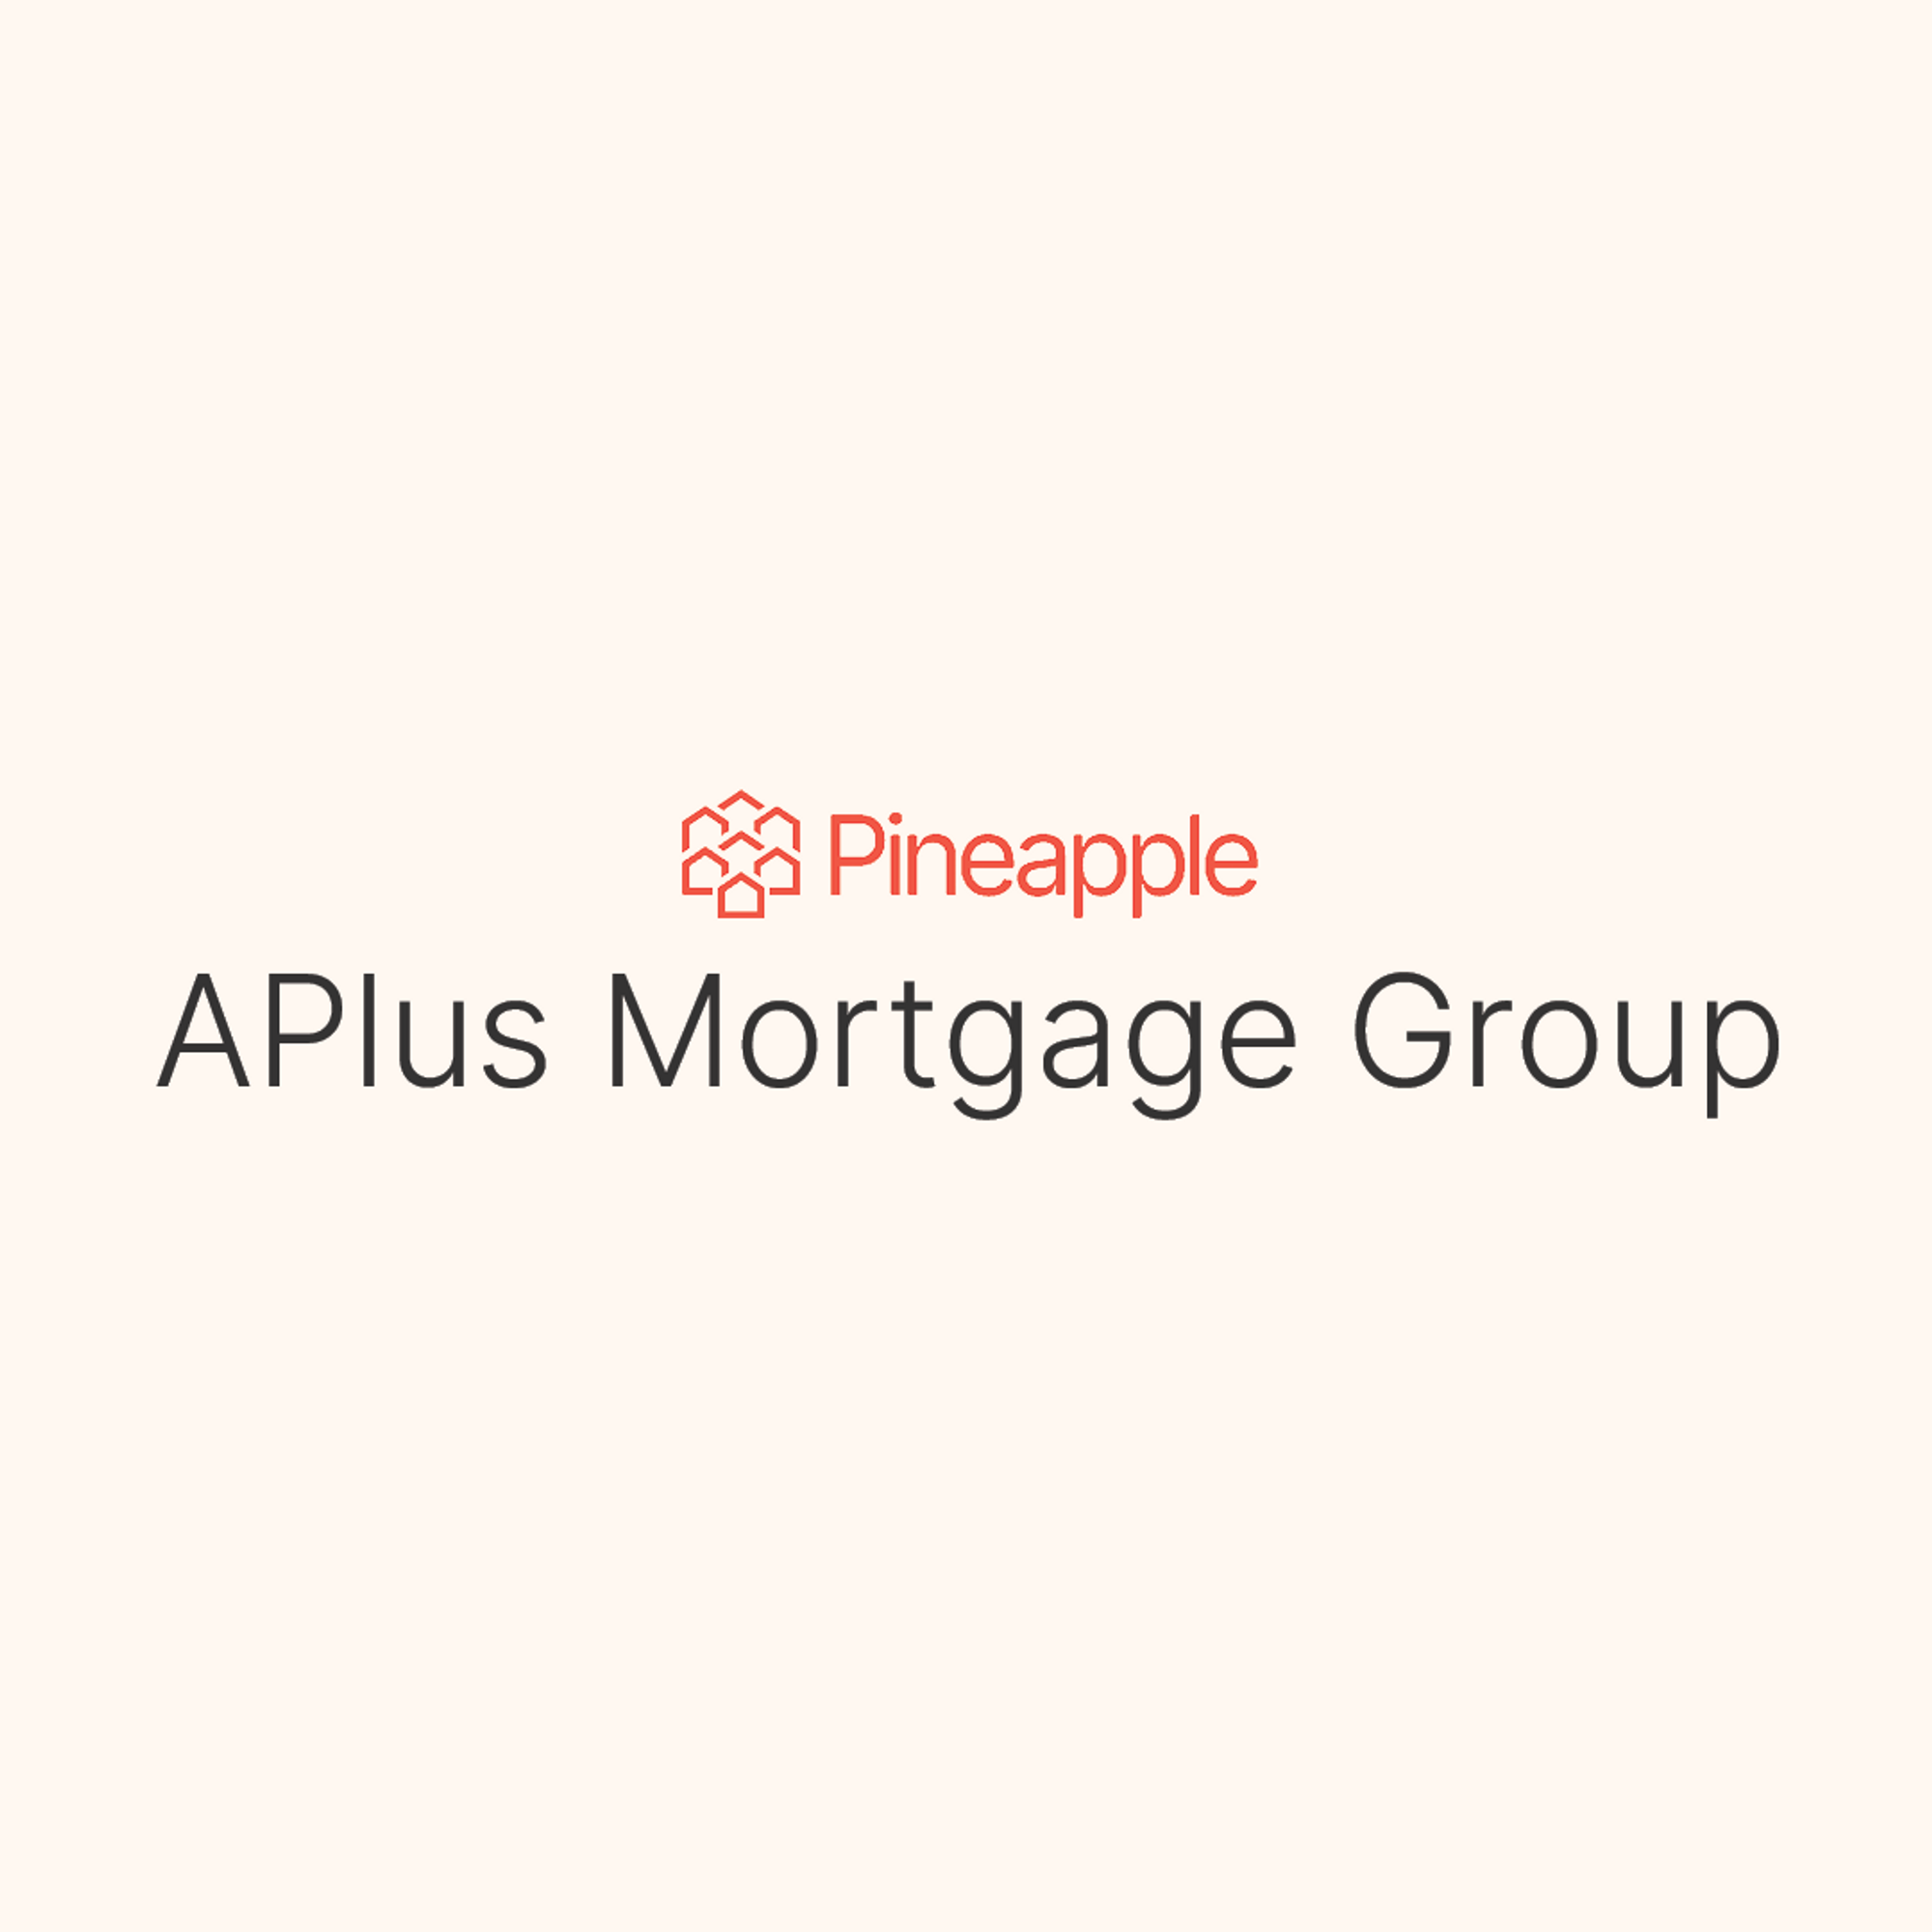 APlus Mortgage Group